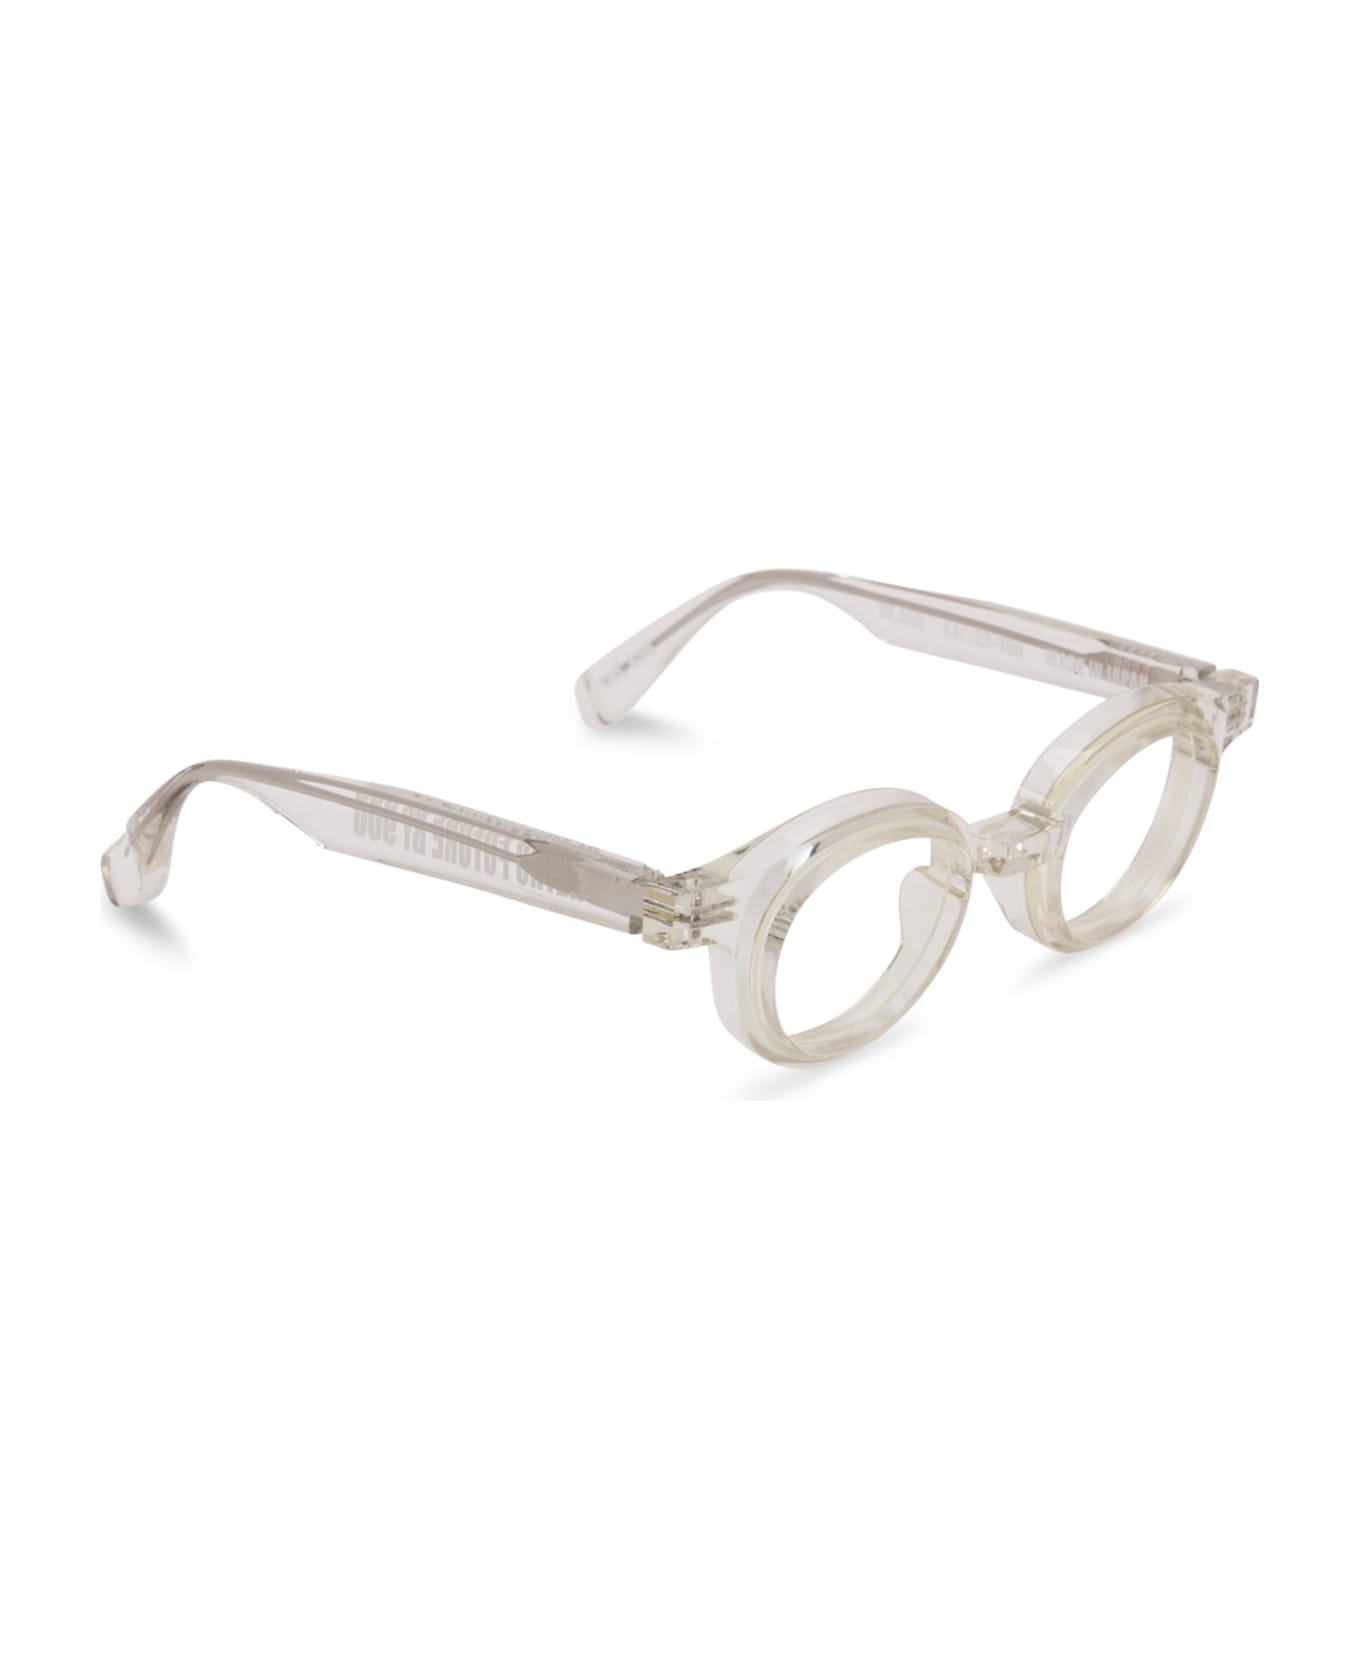 FACTORY900 Rf 003-850 Glasses - Crystal アイウェア